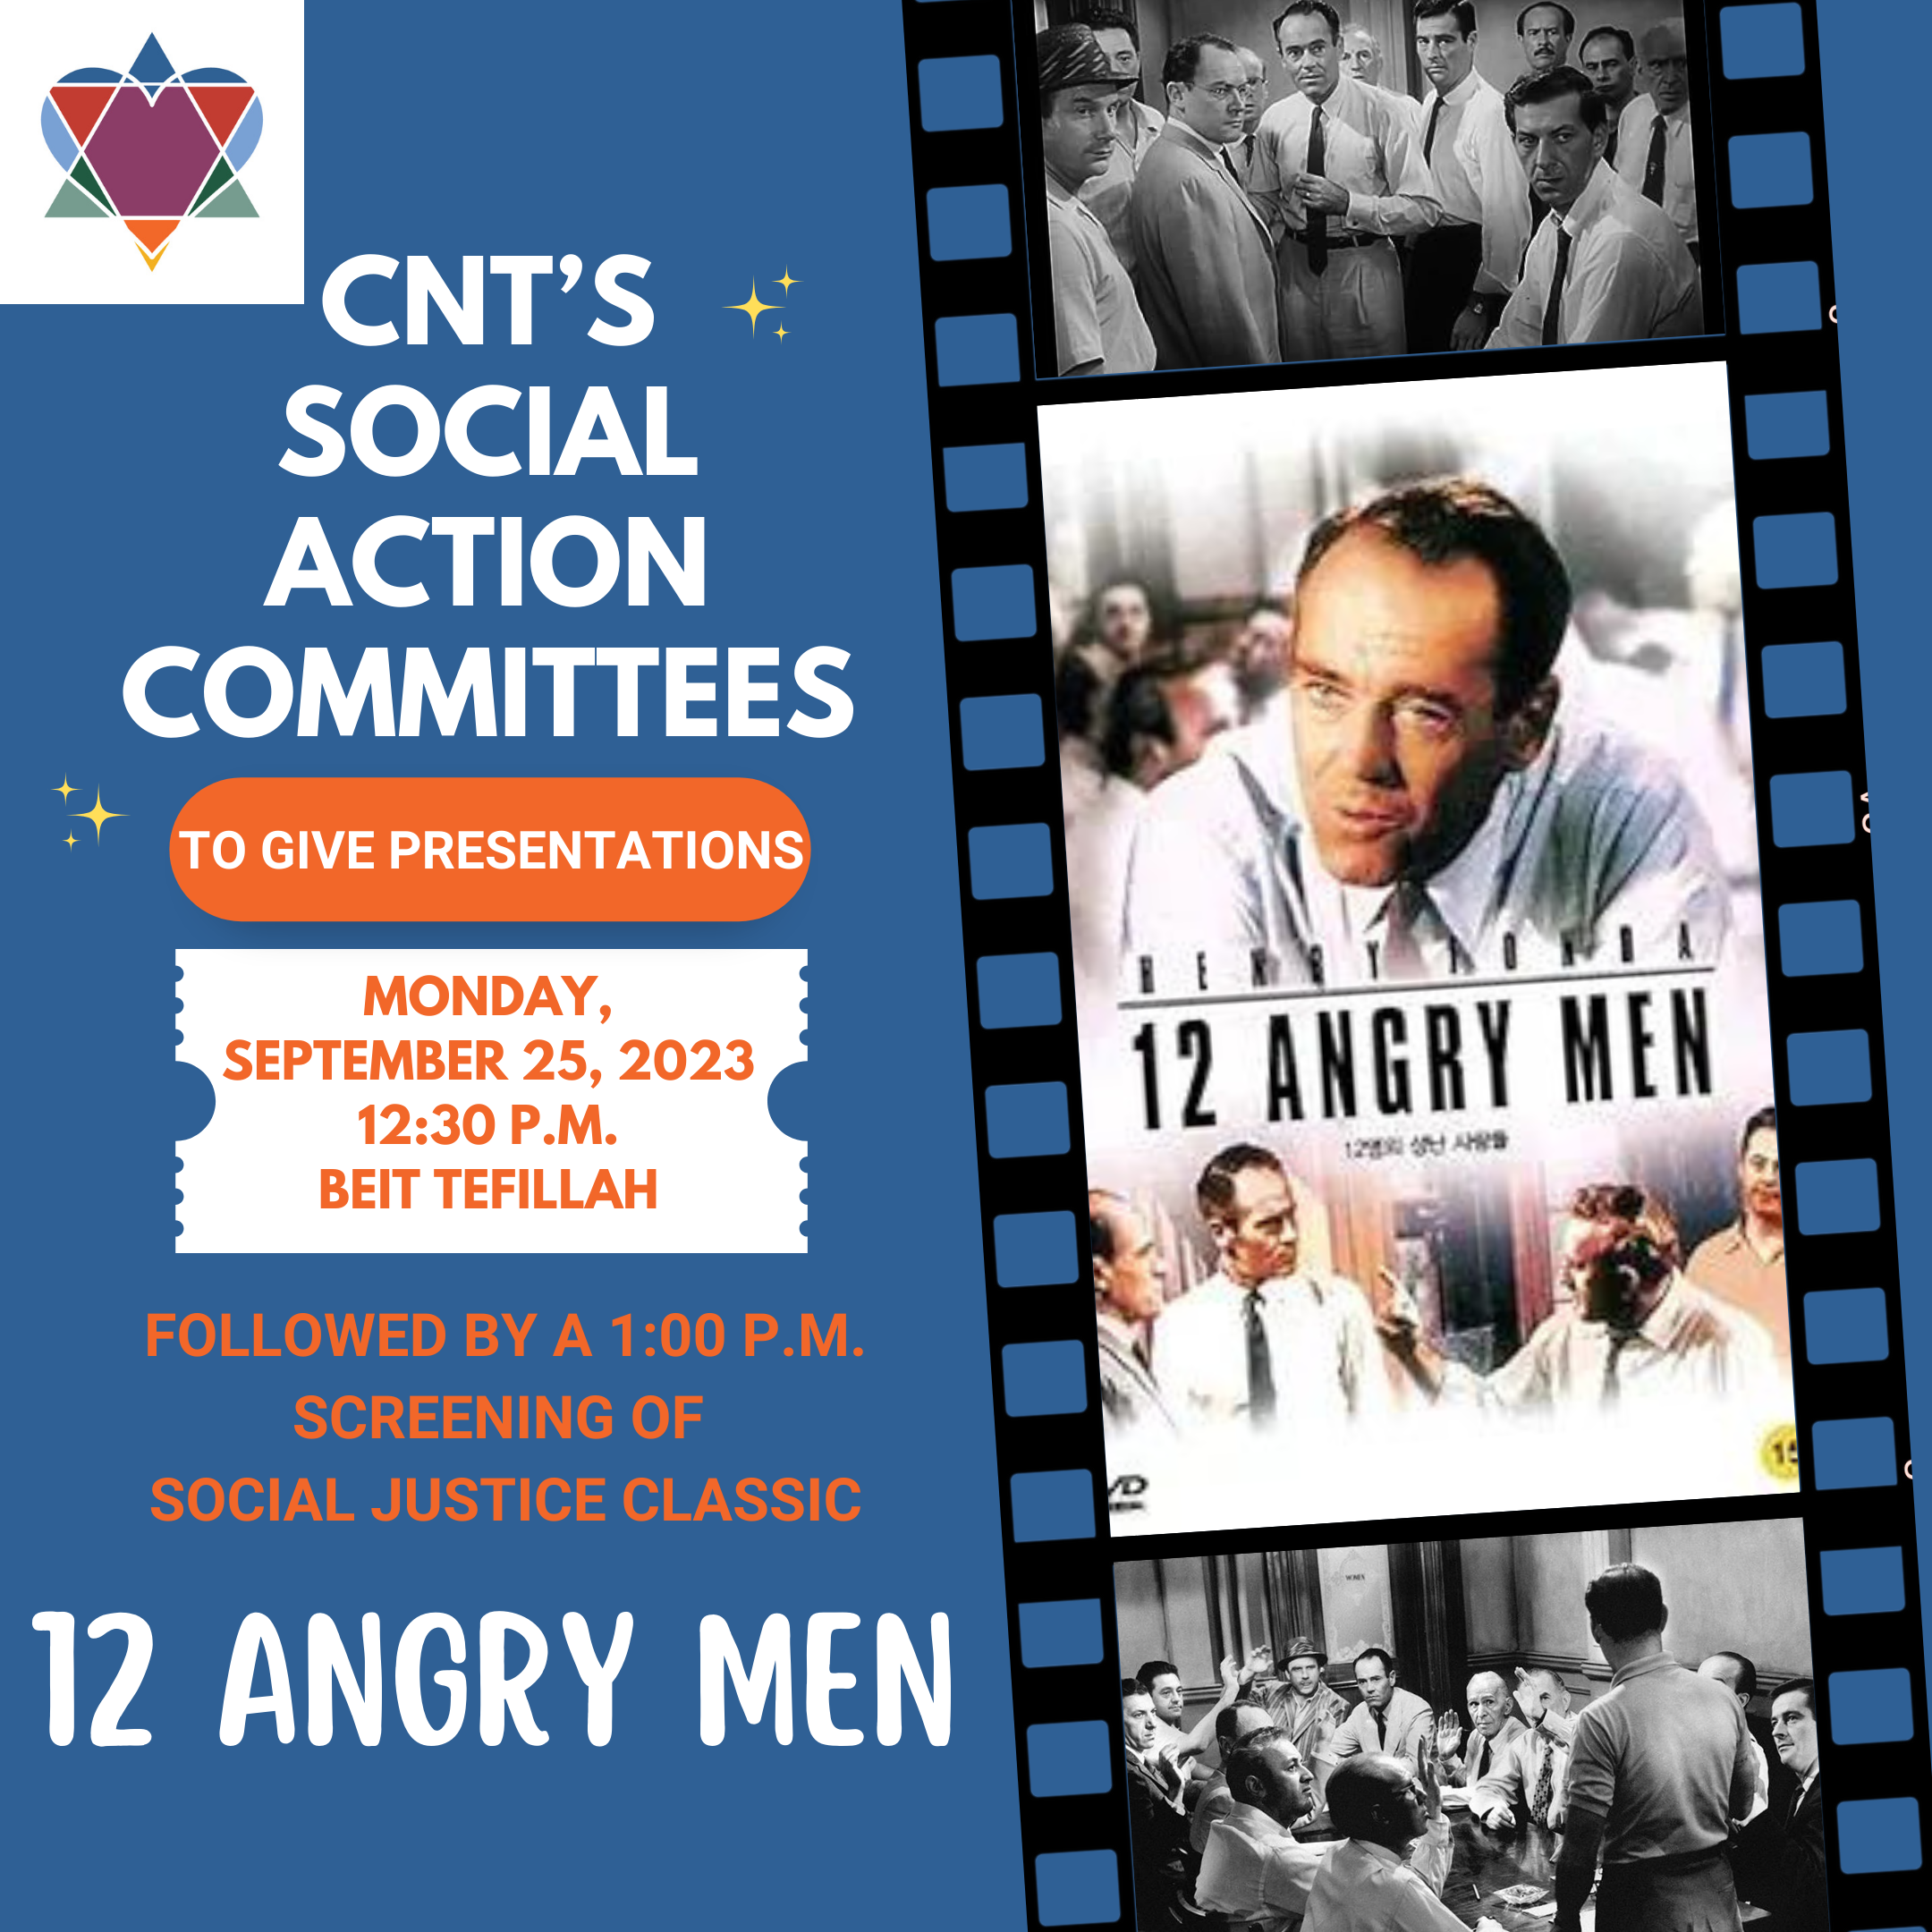 SOCIAL ACTION PRESENTATIONS, 12 ANGRY MEN FILM SCREENING